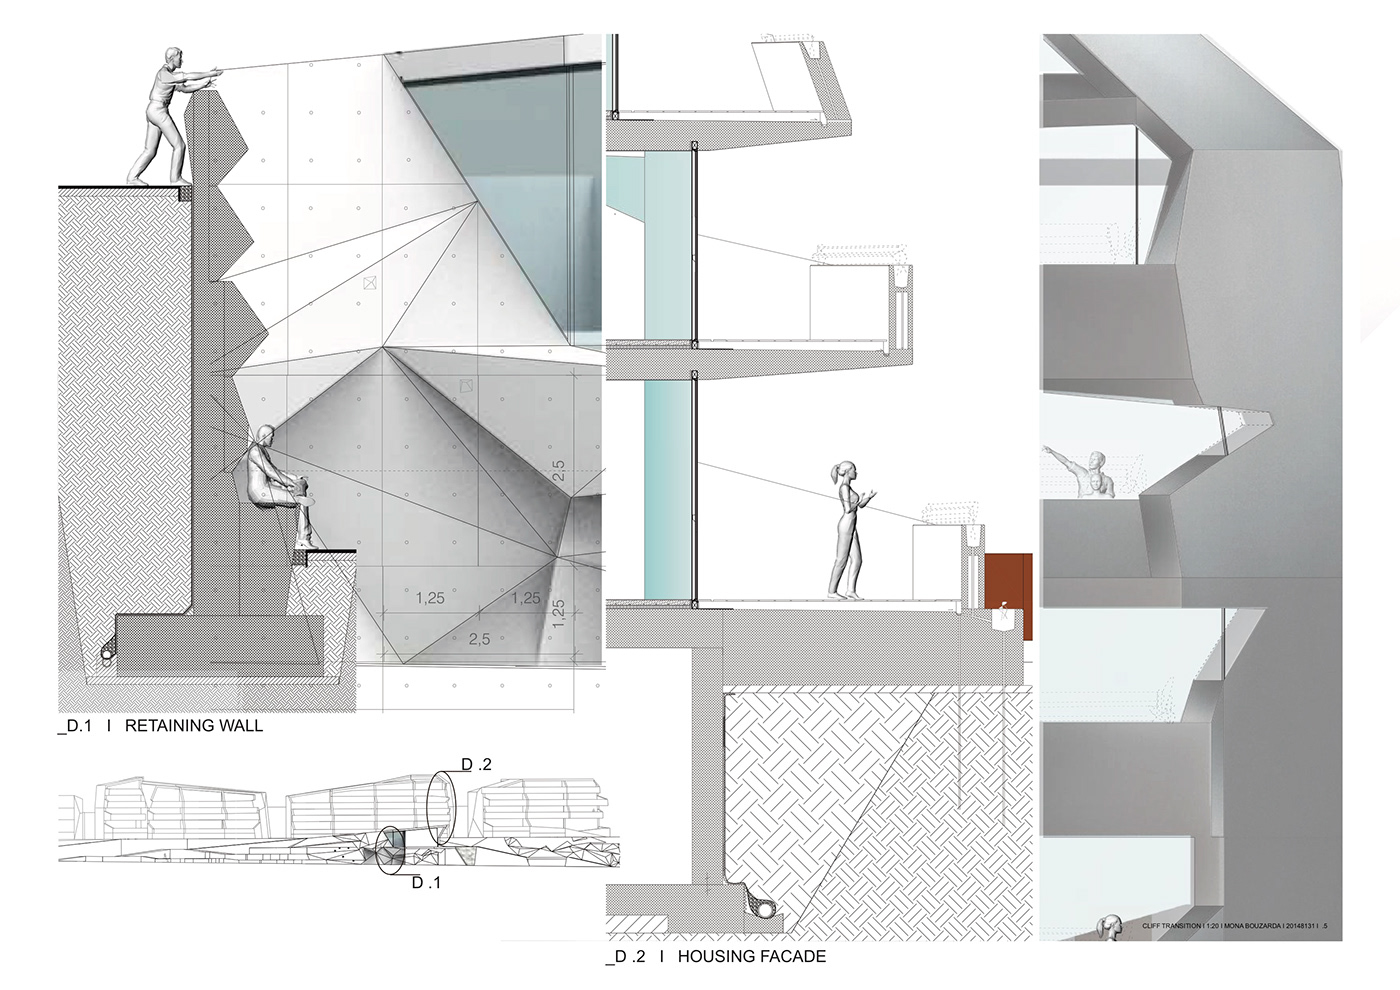 archilover architecture architectureportfolio buildingdesign creativearchitecture design buldings concretedesign